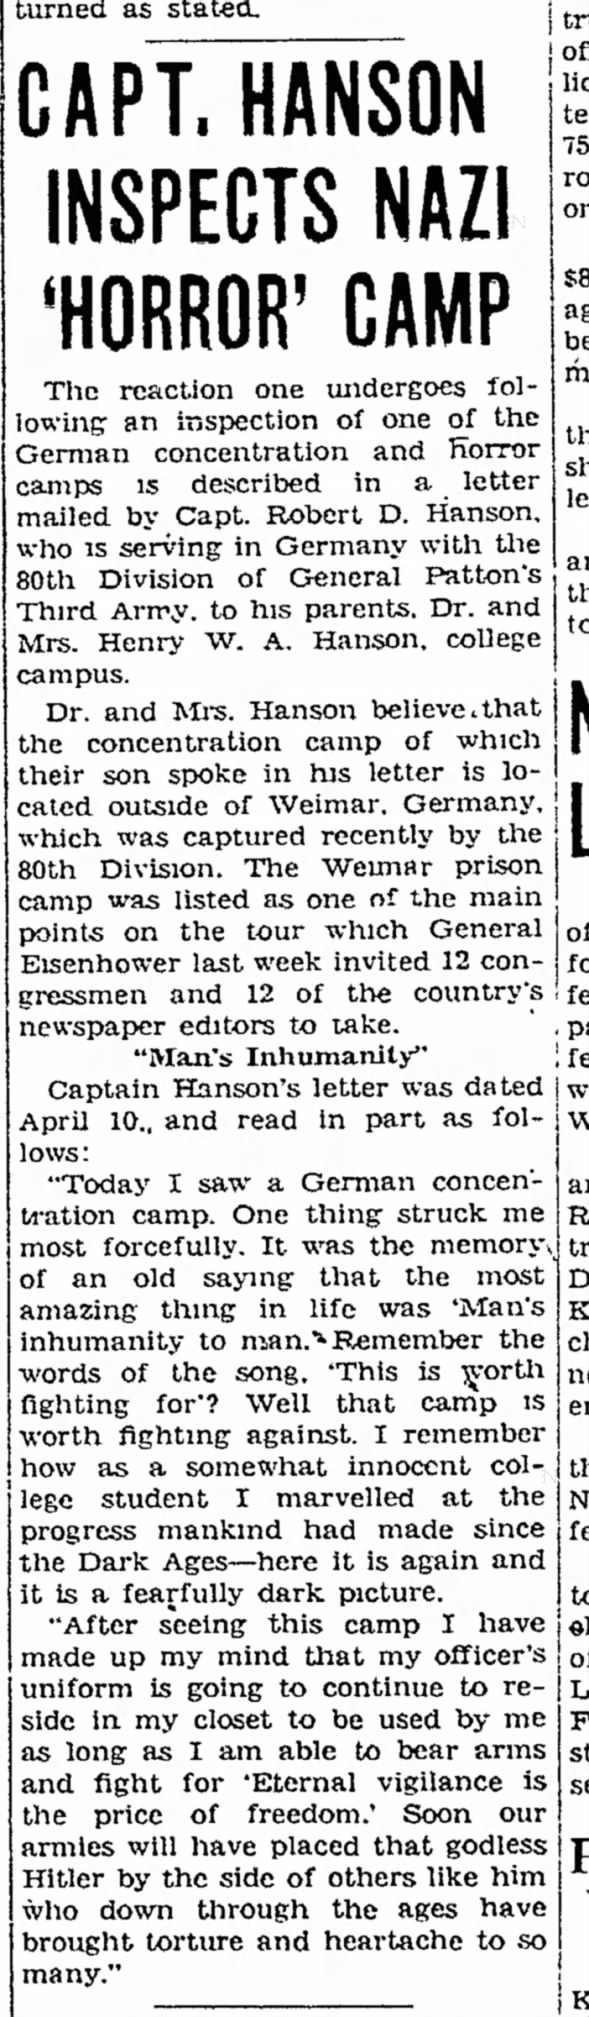 Capt. Hanson Inspects Nazi 'Horror' Camp